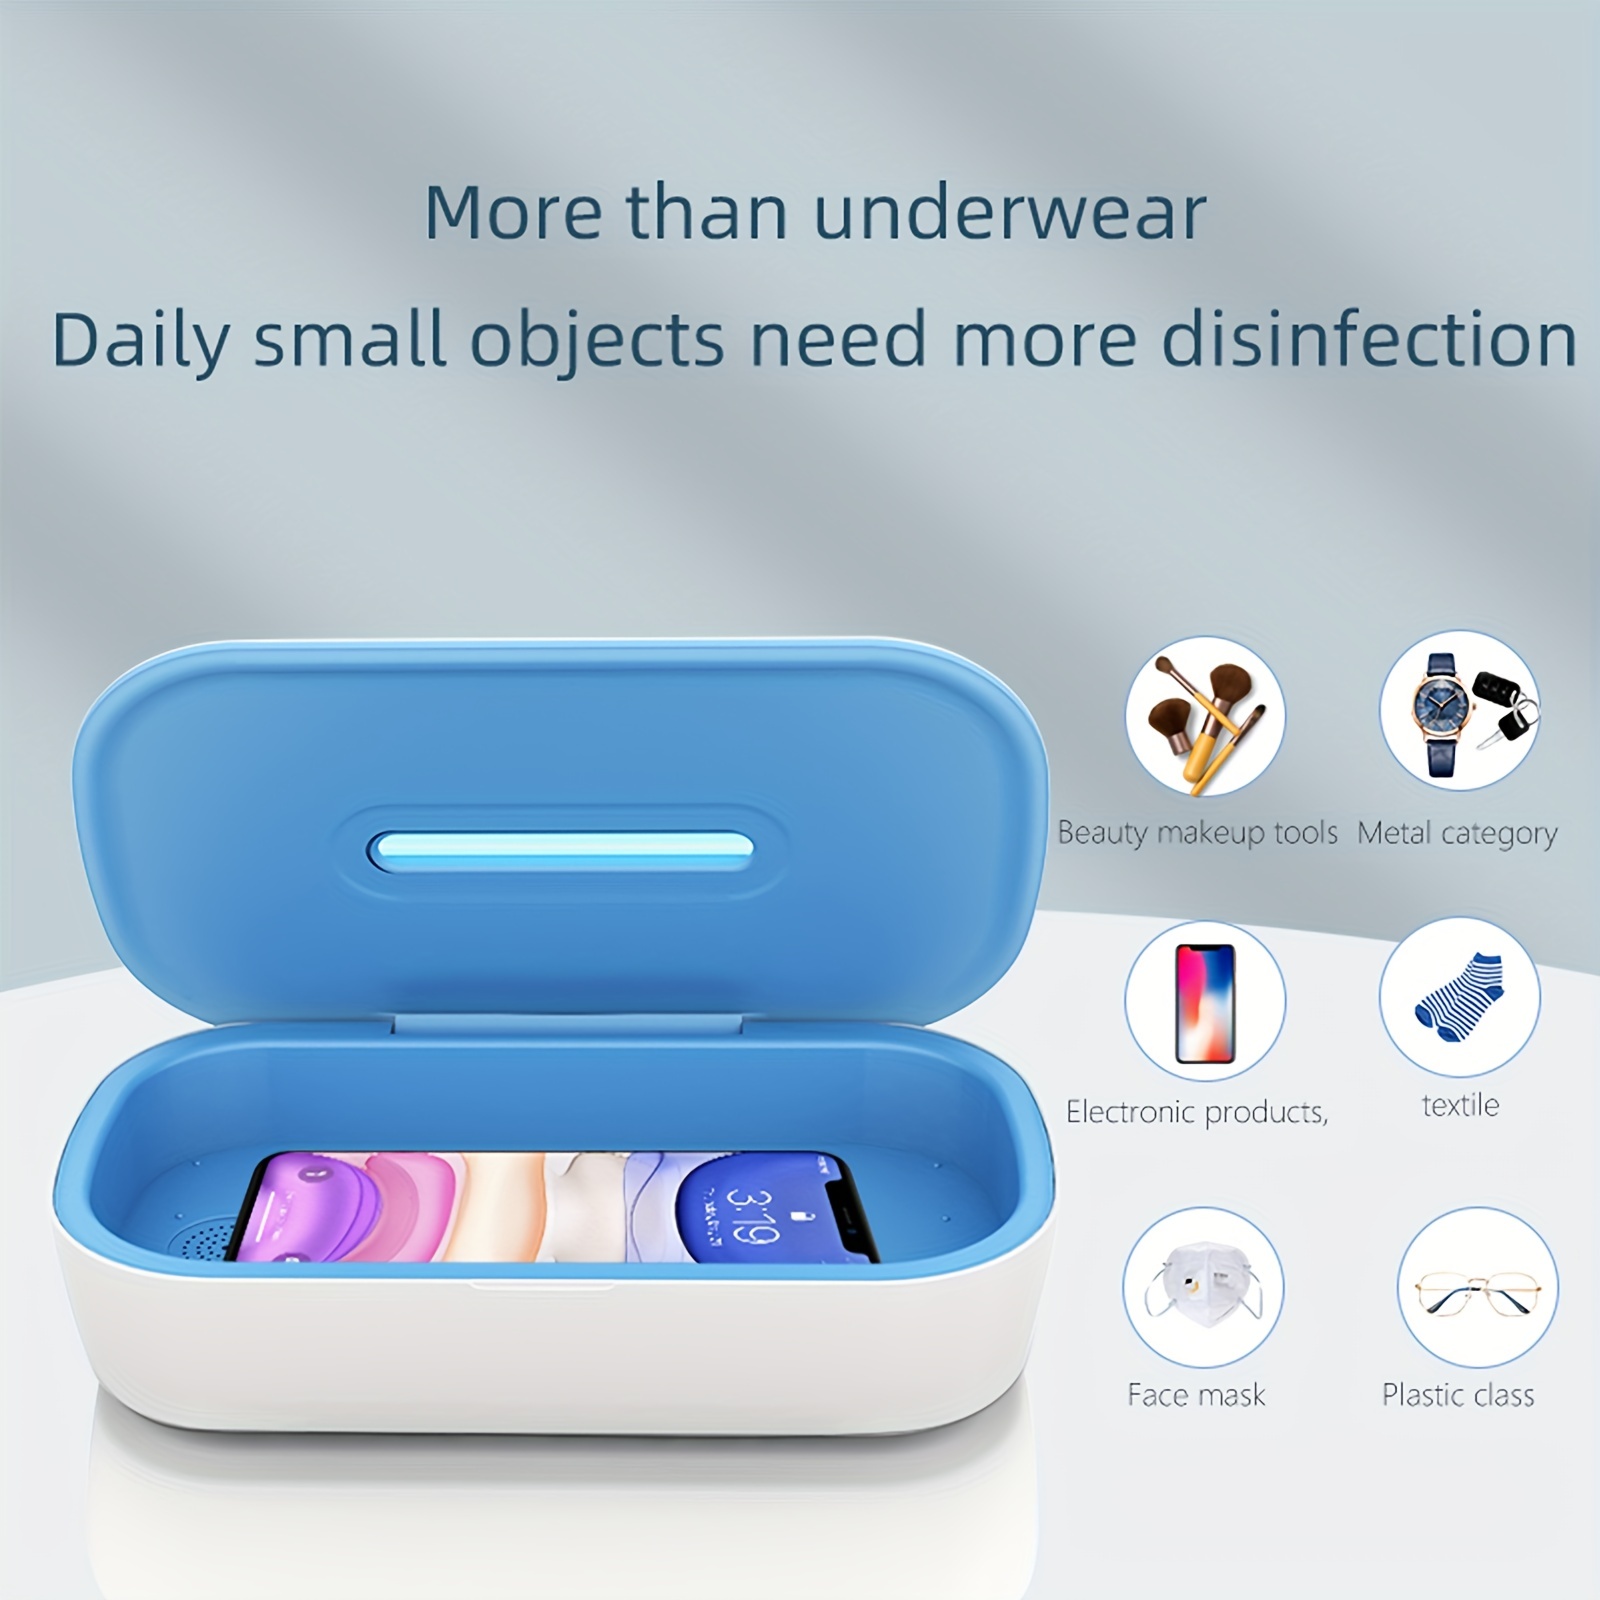 Genai Smart Uv Disinfection Box Esterilización 99% Tasa Caja - Temu Chile